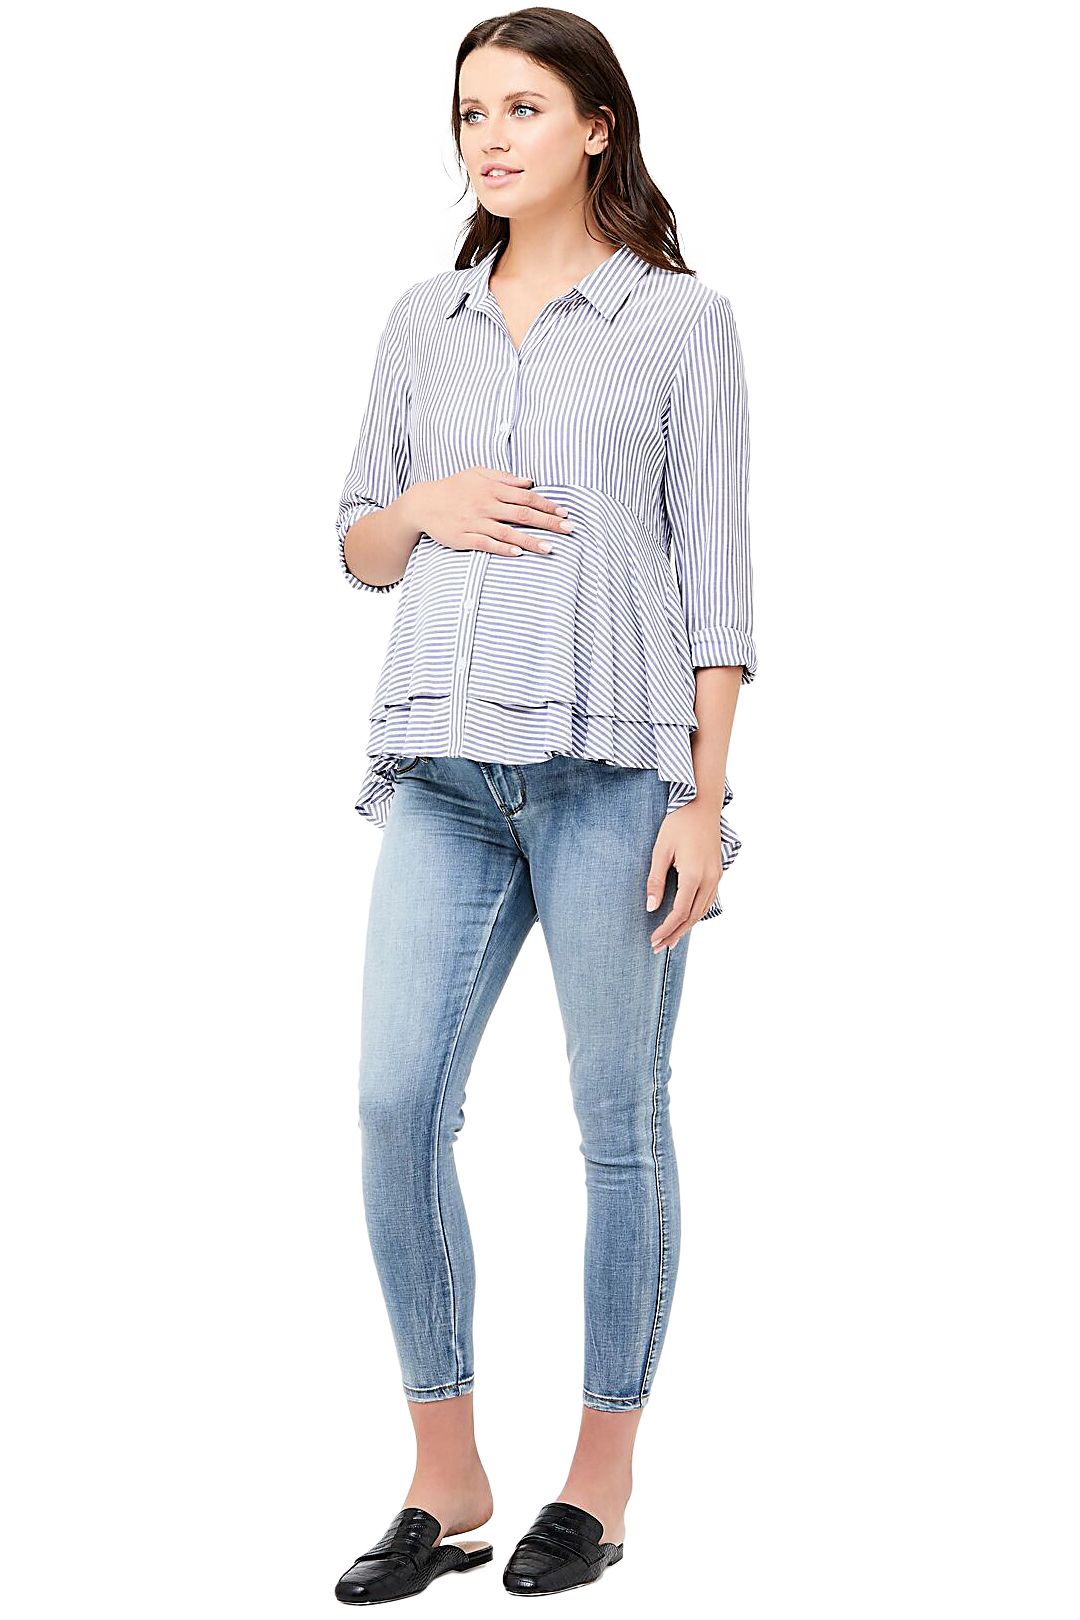 Ripe Maternity-Stripe-Layered-Peplum-Shirt-Navy-White-Front